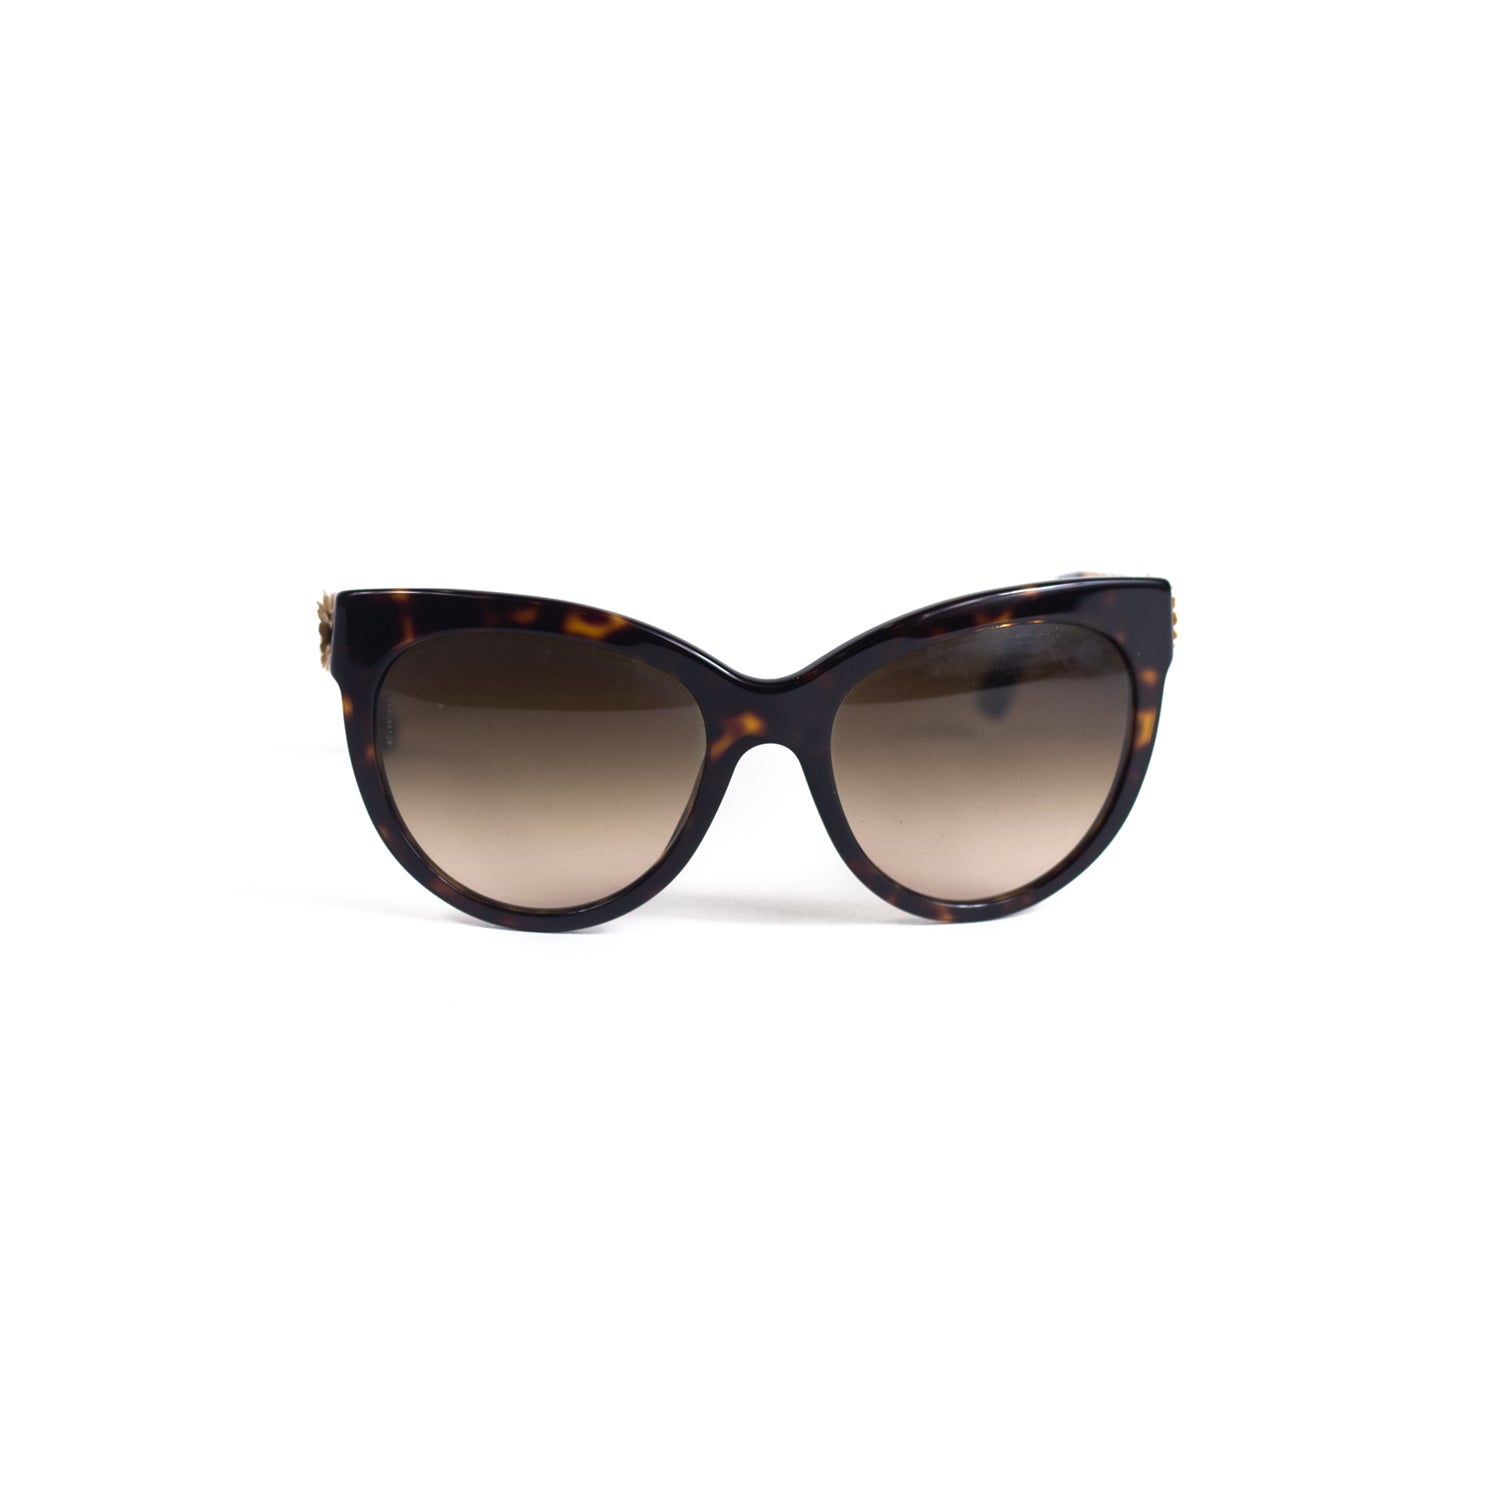 Black Golden Design Sunglasses